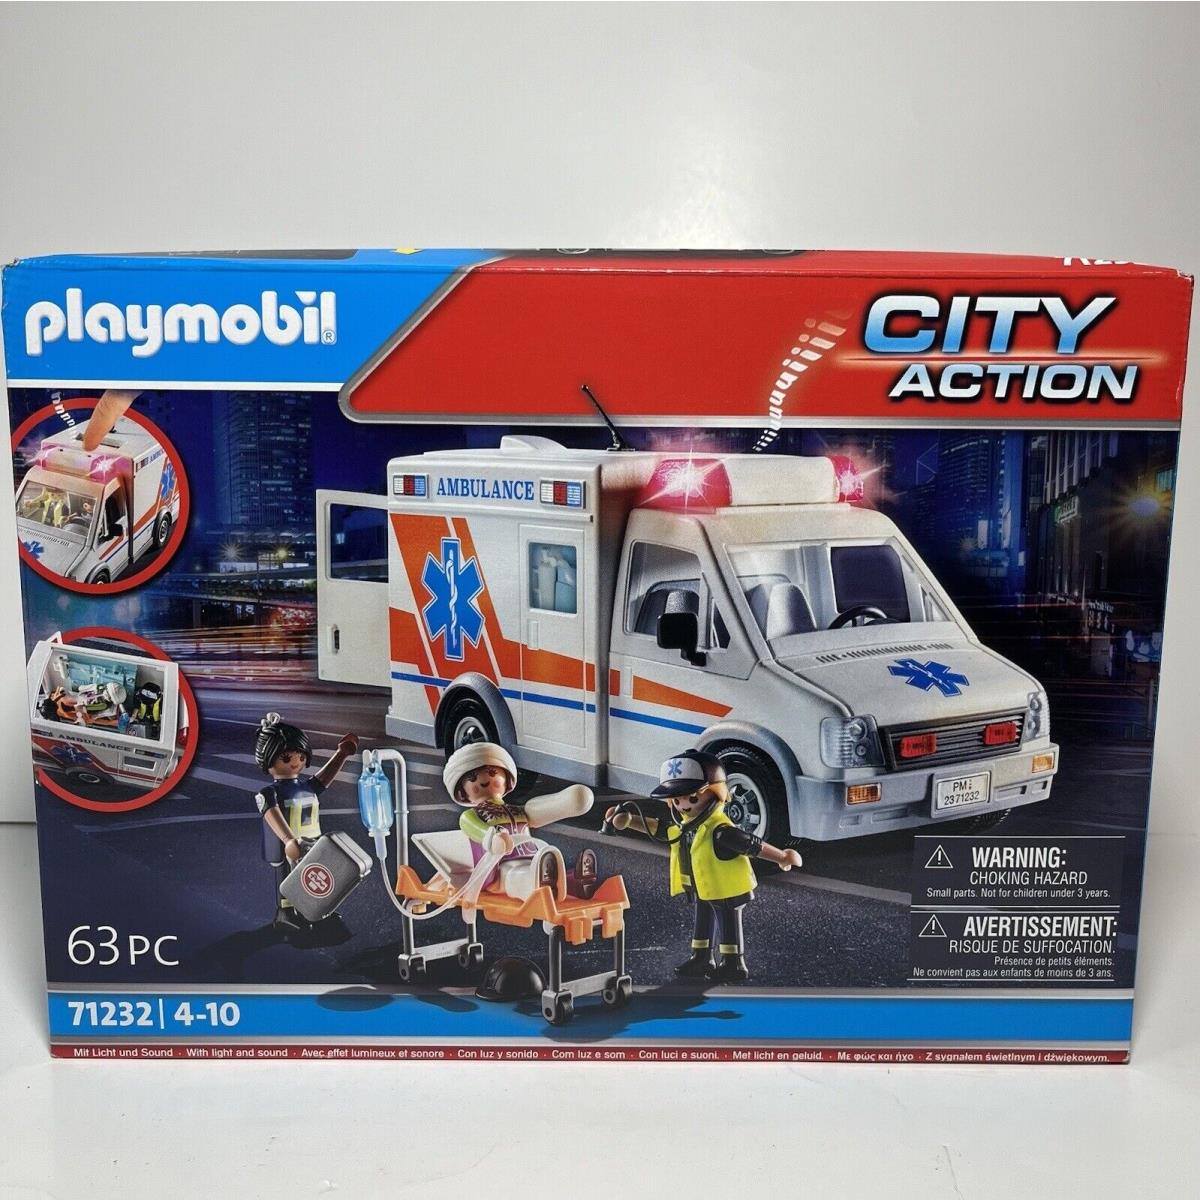 Playmobil City Action Ambulance Building Set 63 Piece 71232